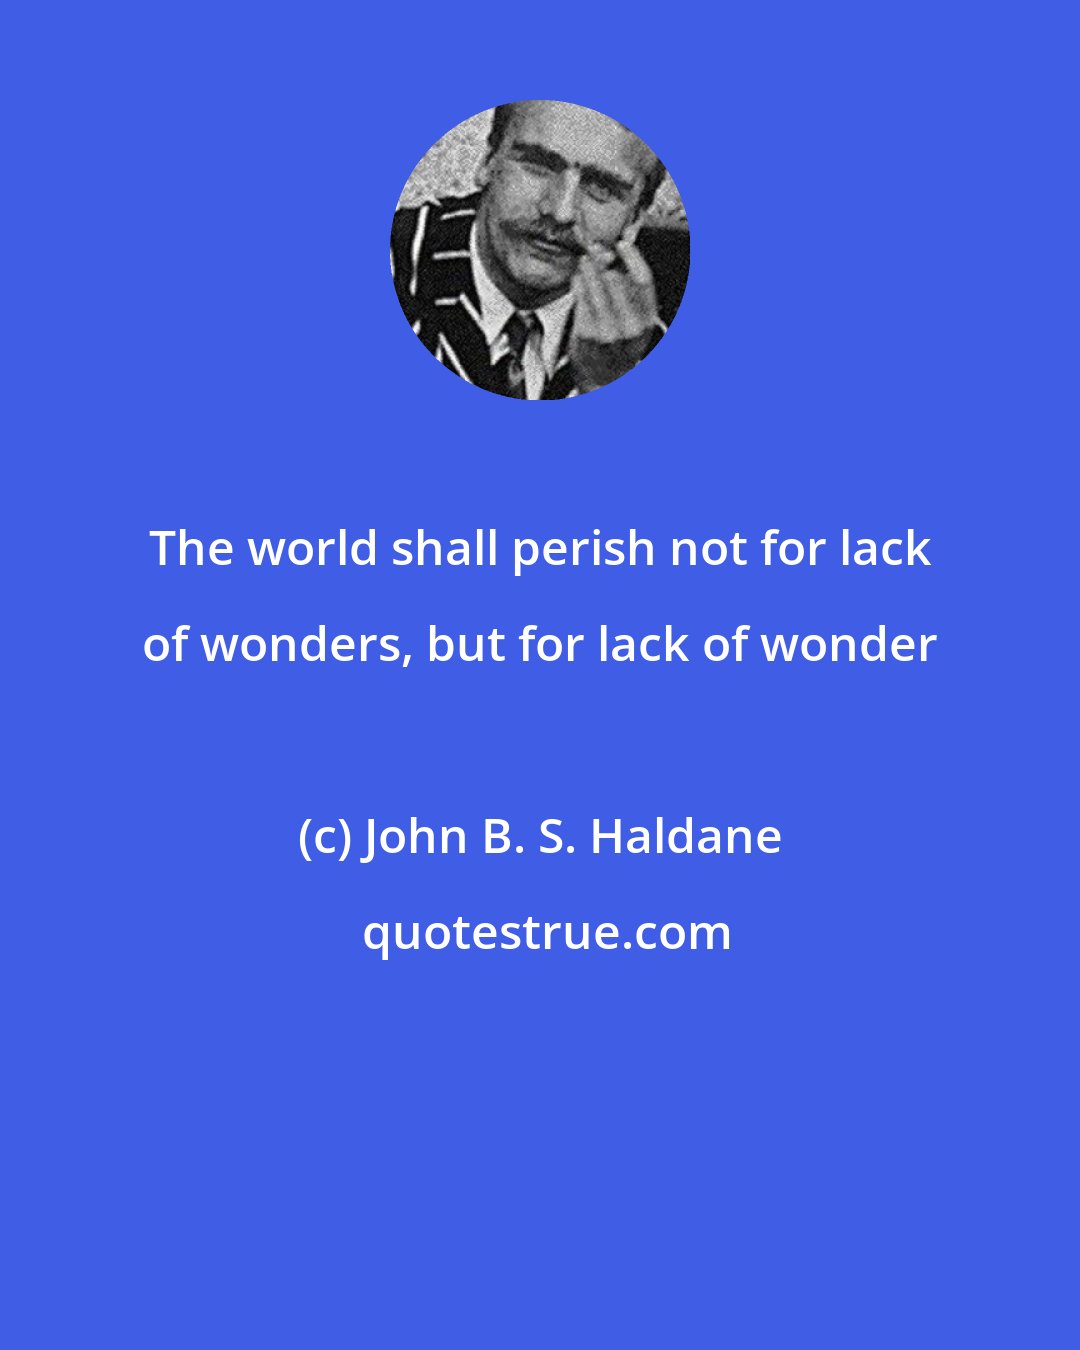 John B. S. Haldane: The world shall perish not for lack of wonders, but for lack of wonder